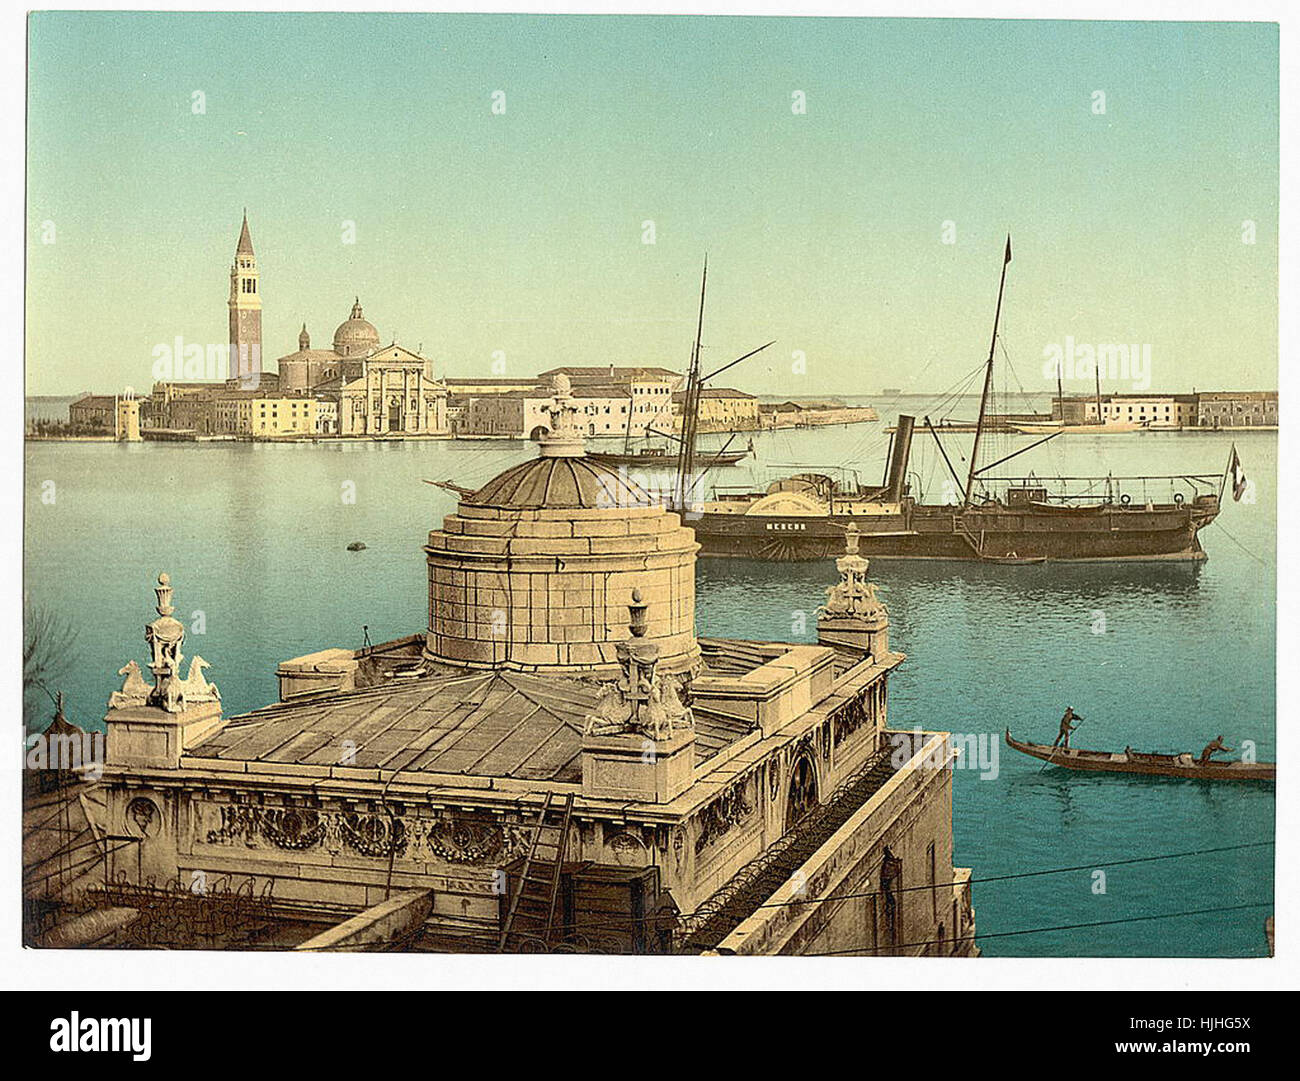 Hafen, Venedig, Italien - Photochrom XIXth Jahrhundert Stockfoto